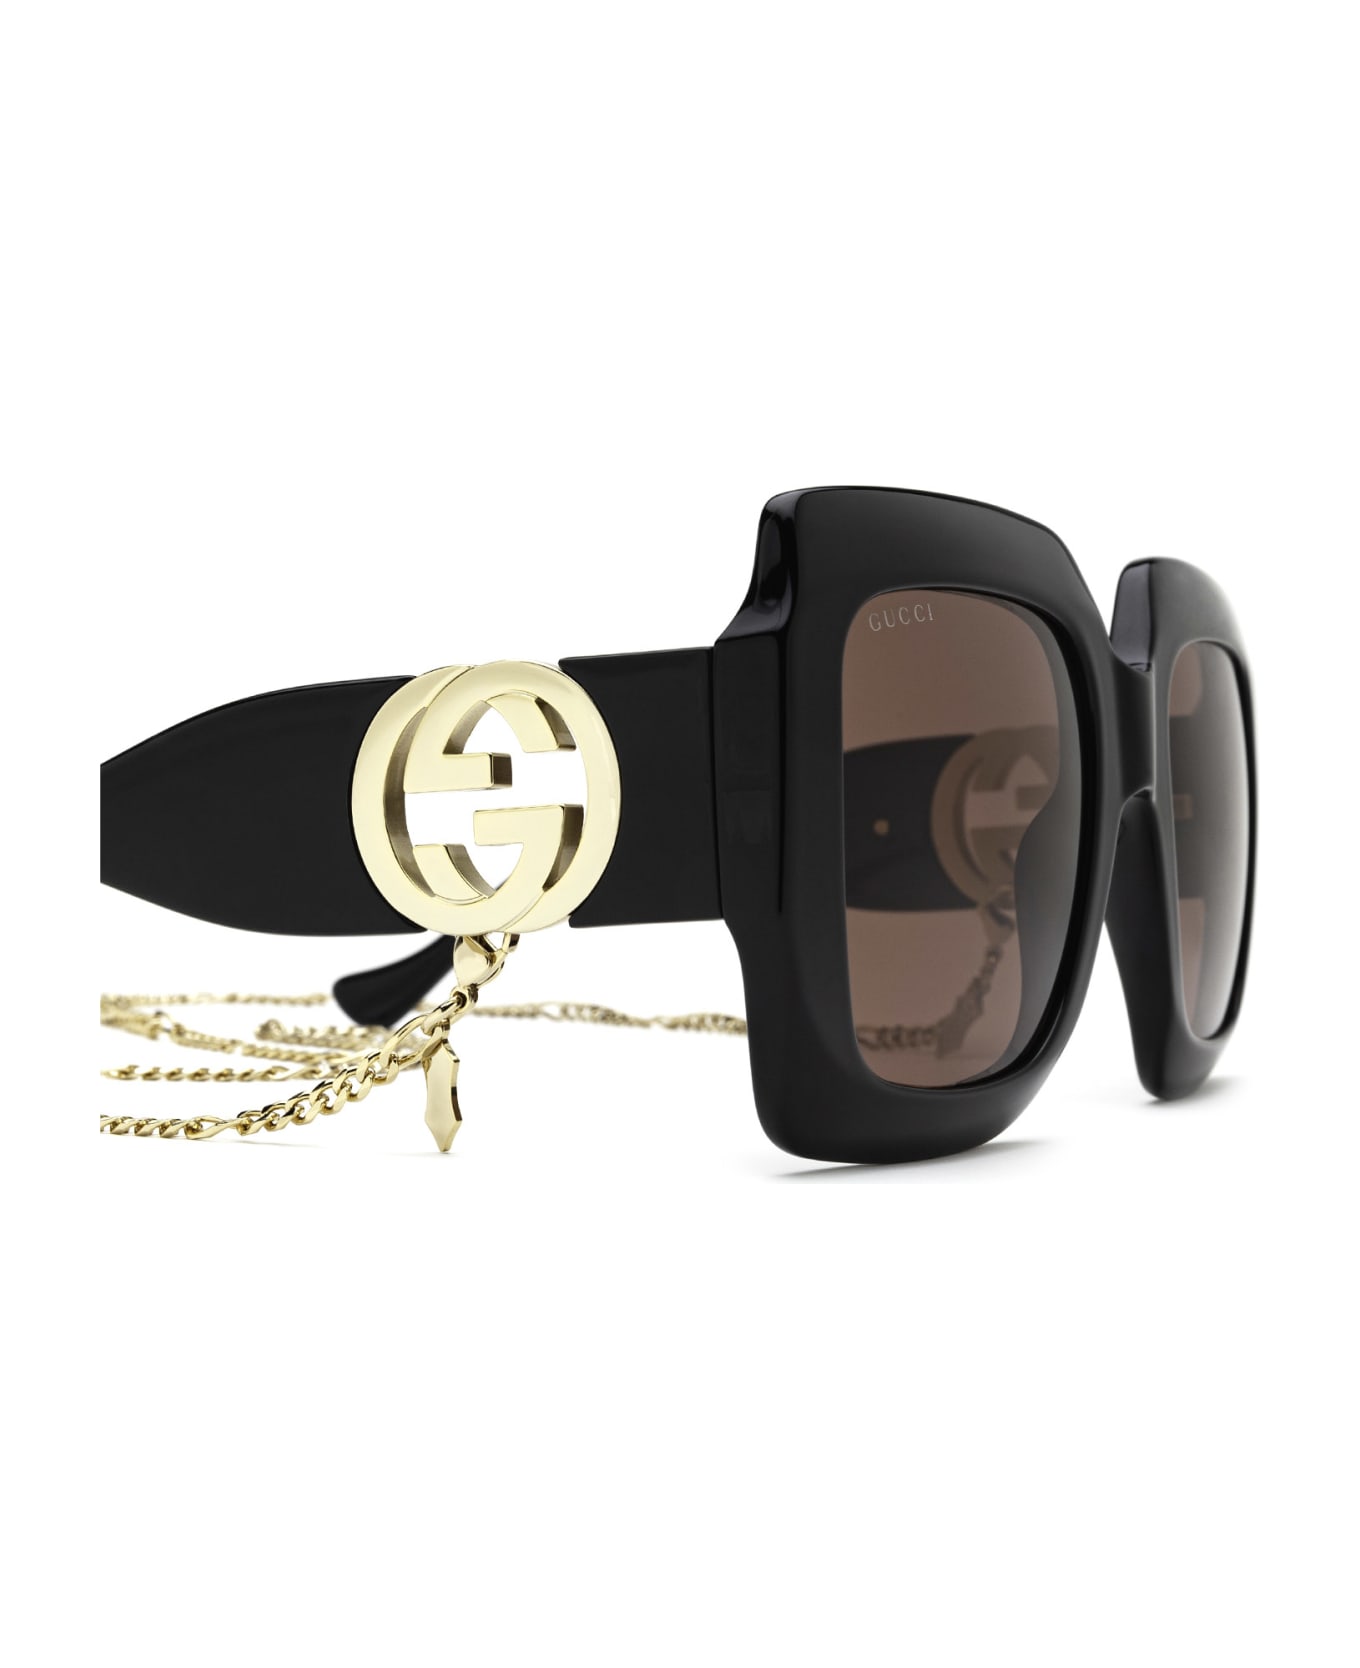 Gucci Eyewear Gg1022s Black Sunglasses - Black